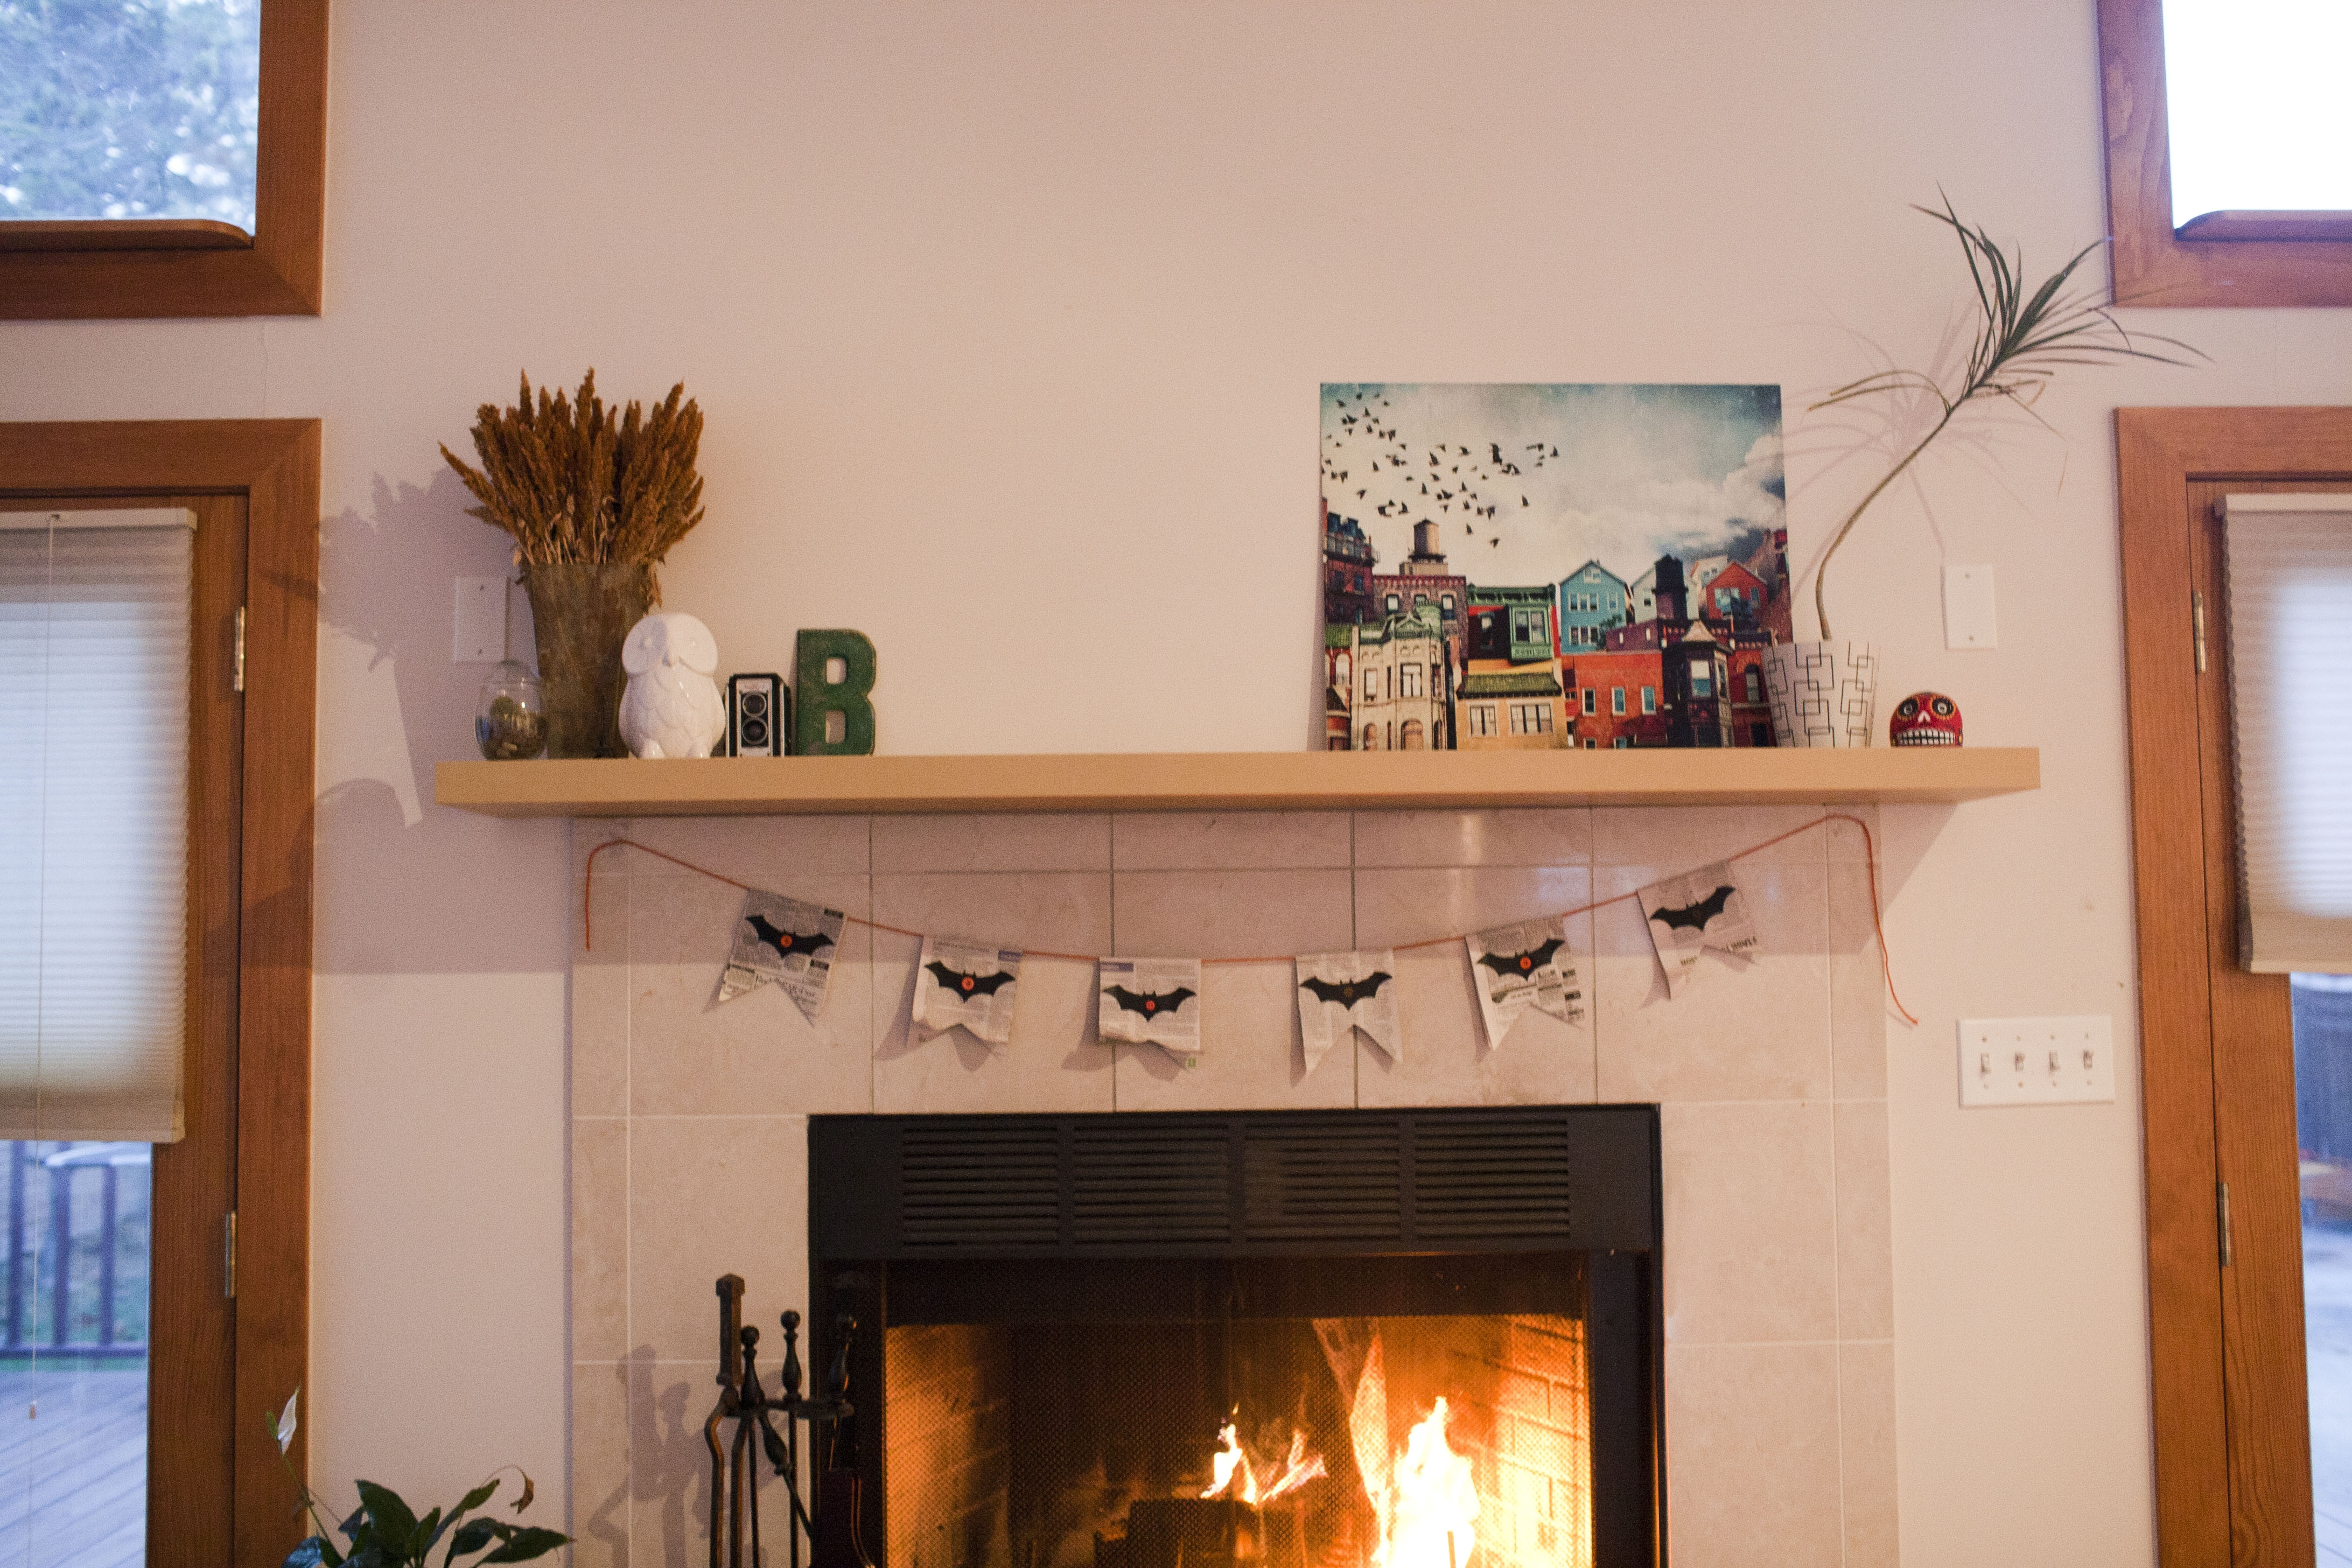 Best ideas about Fireplace Mantel Shelf
. Save or Pin Wall Mount Mantel Shelf Now.